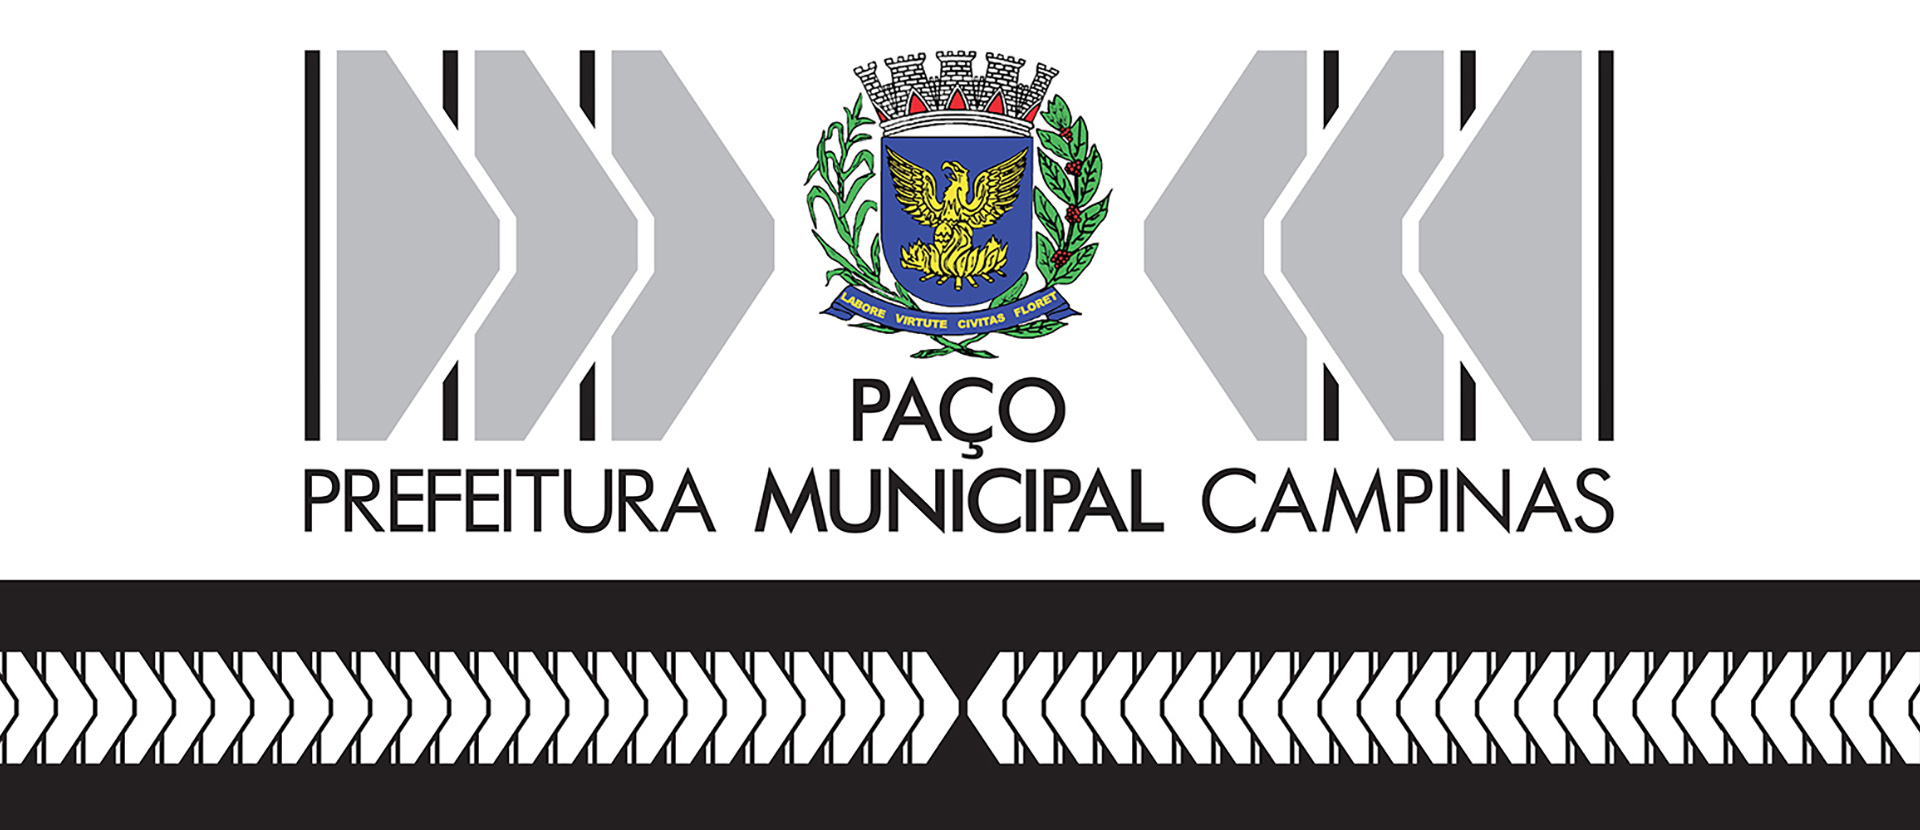 Prefeitura Municipal Campinas – Identidade Visual